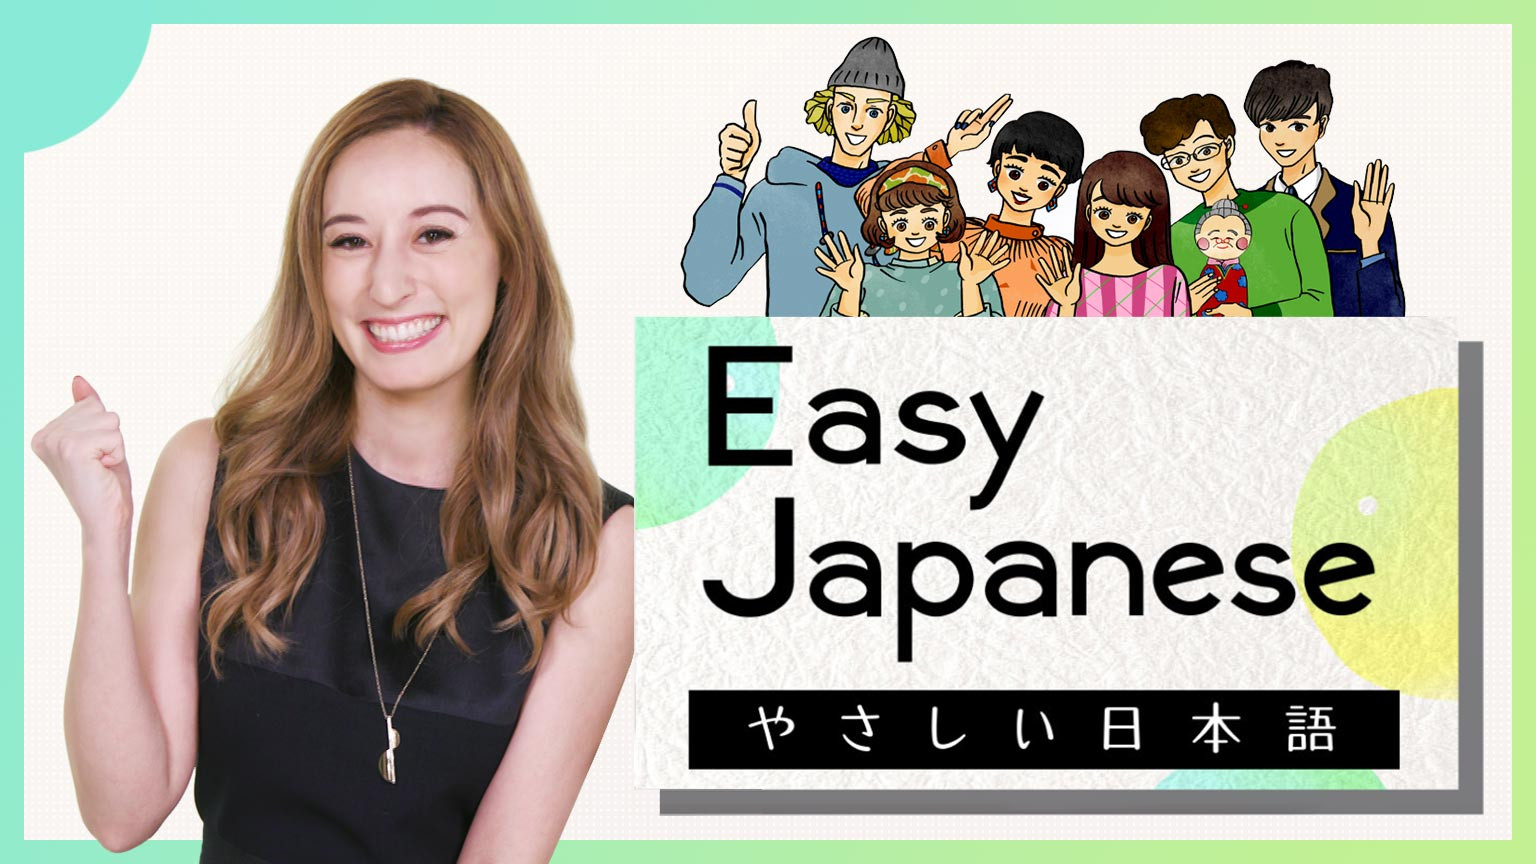 Kolay Japonca
Easy Japanese